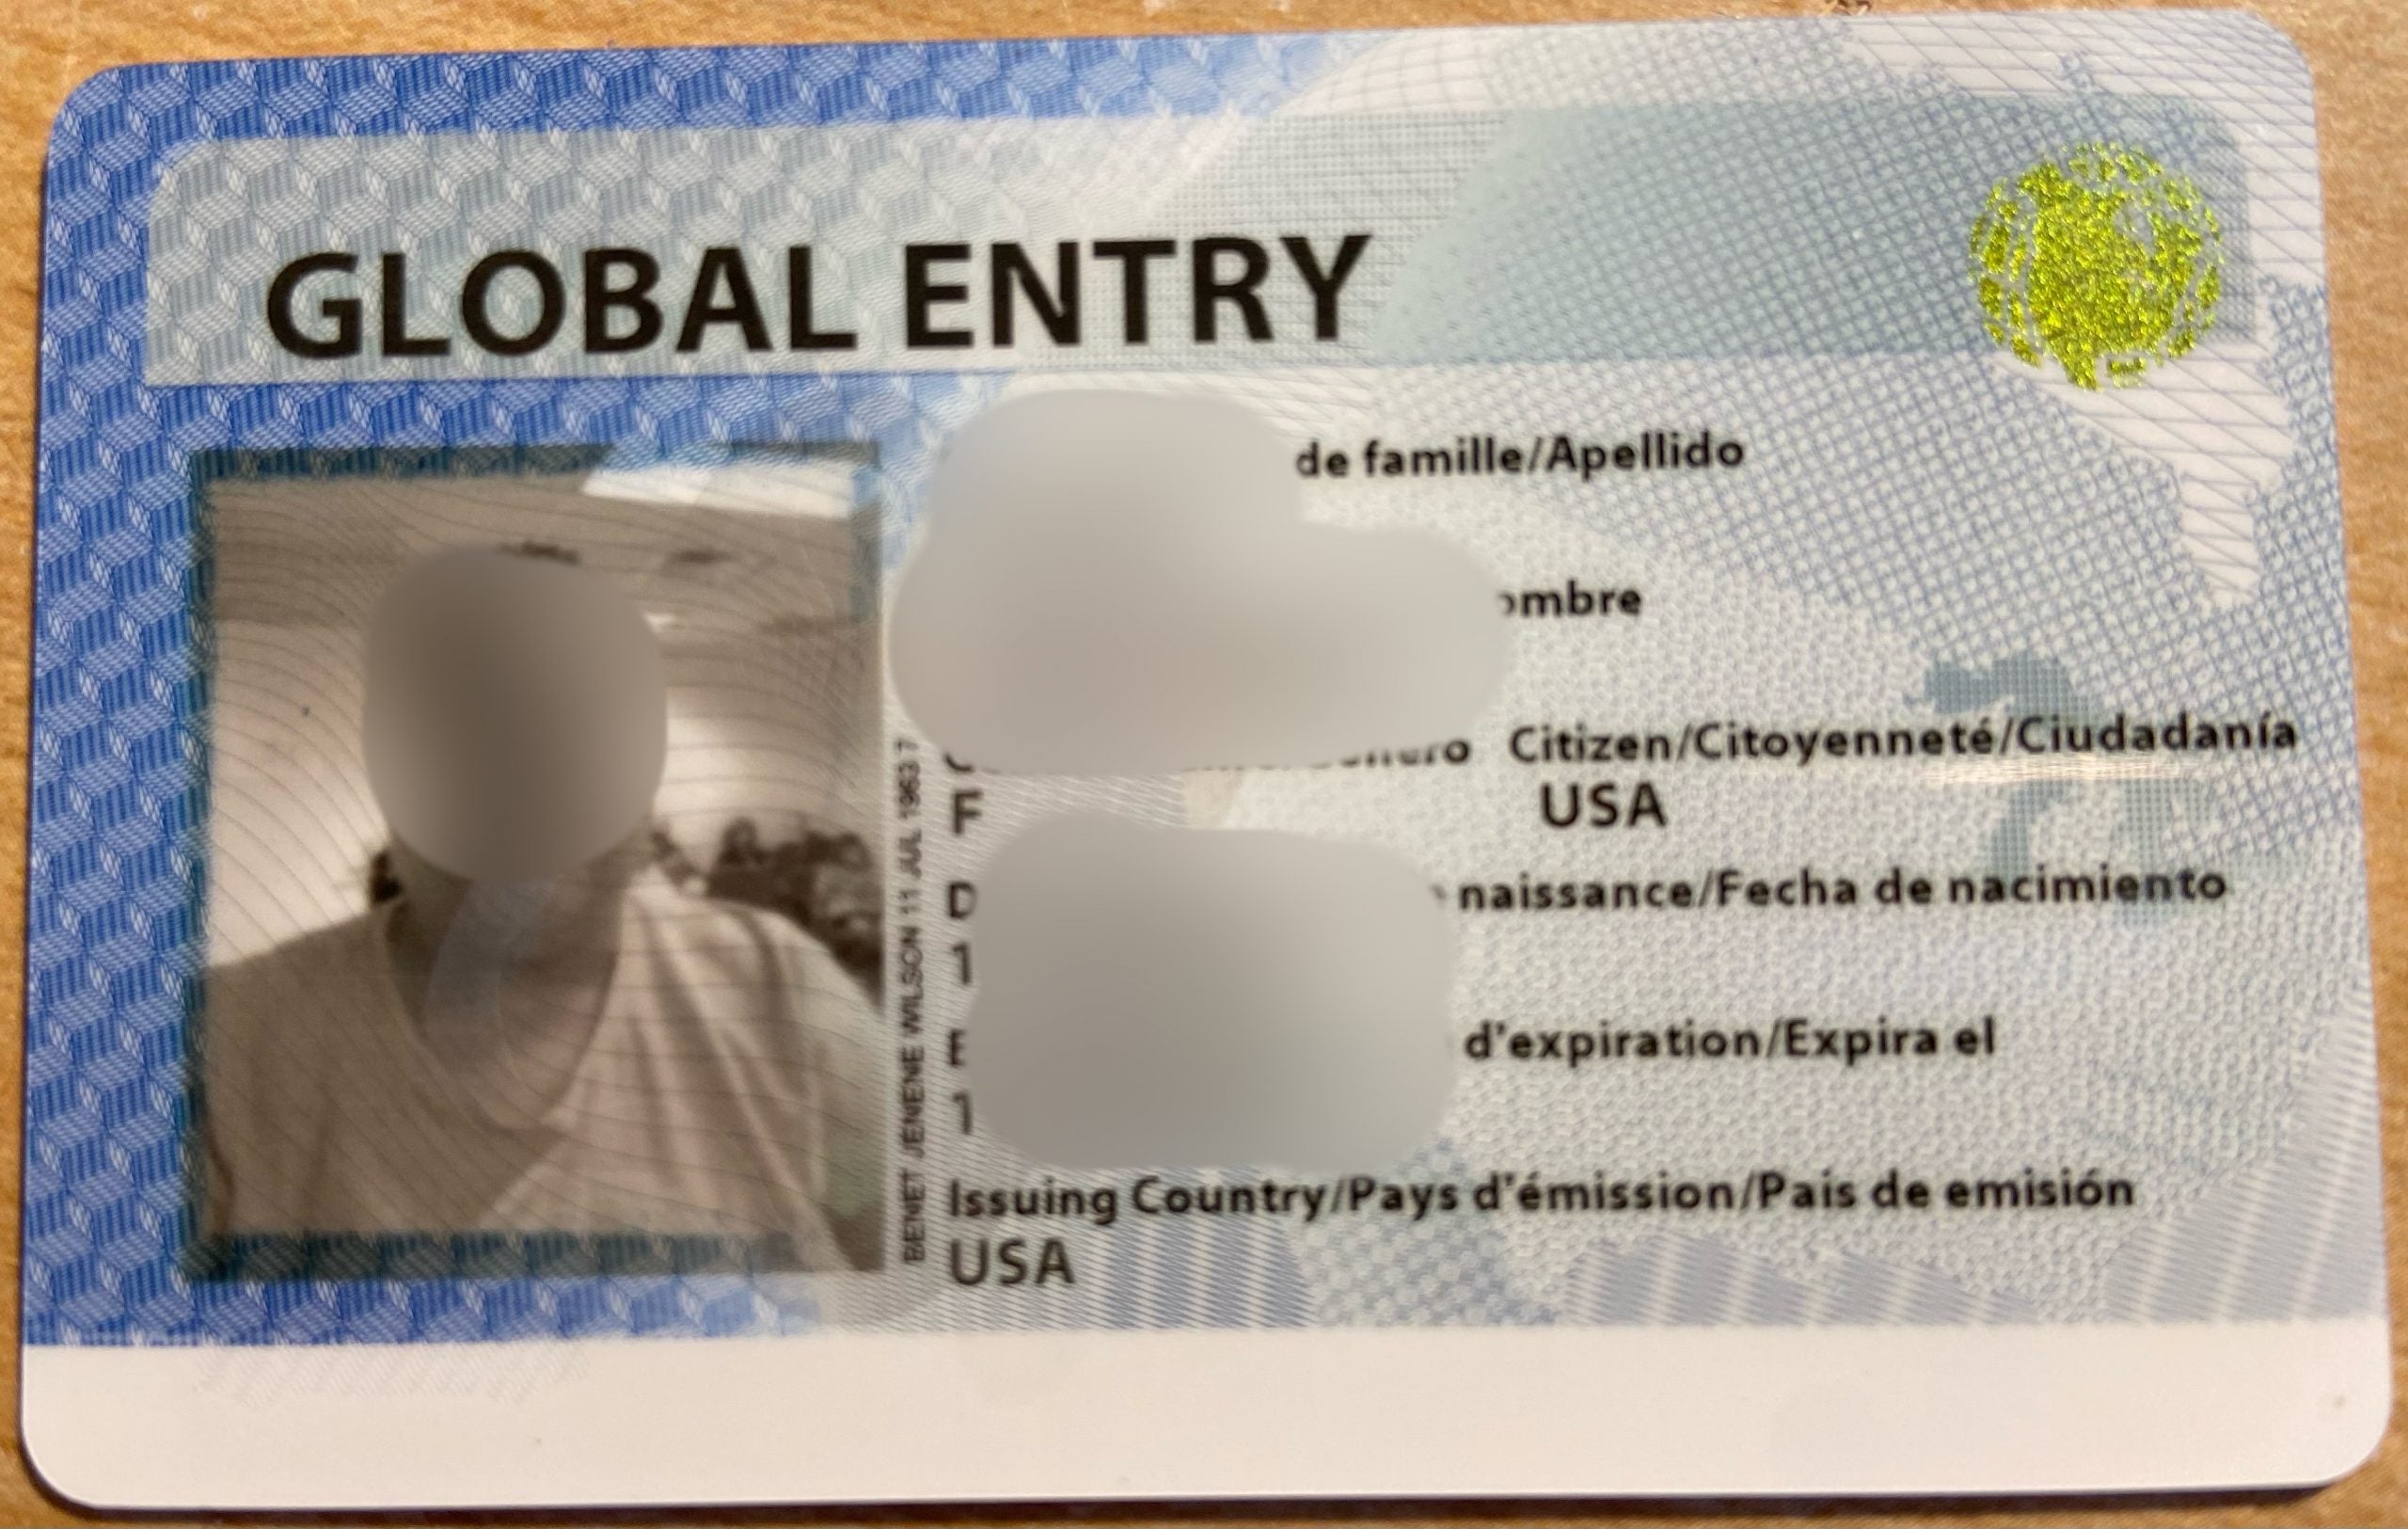 global entry login renewal